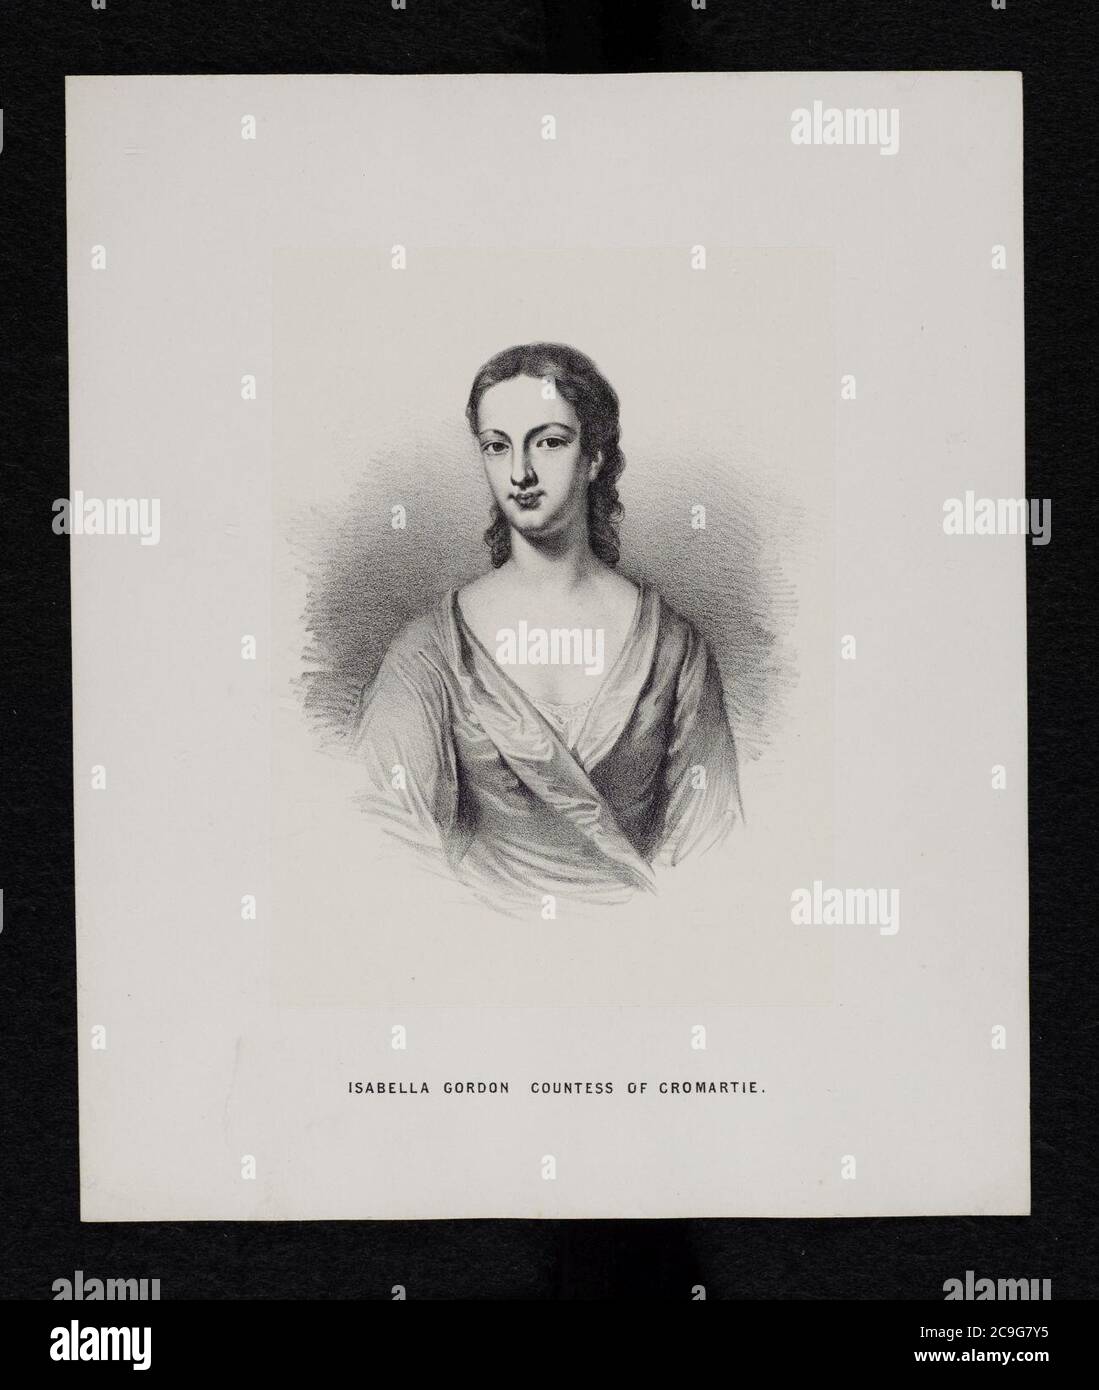 Jacobite broadside - Isabella Gordon, Countess of Cromartie. Stock Photo